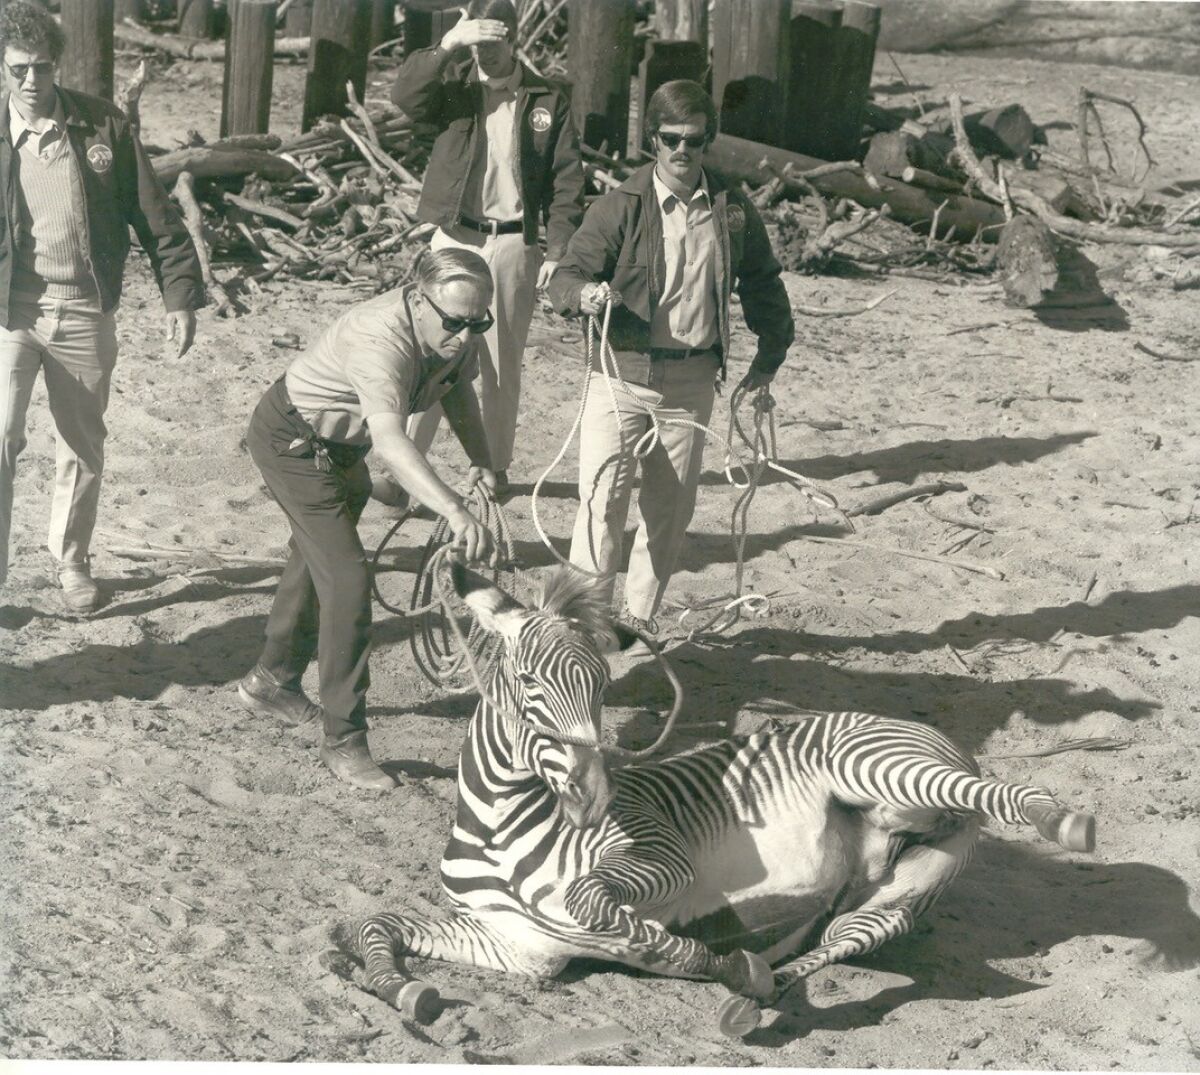 Richard Massena (center, holding rope) helps lasso a zebra at the Wild Animal Park.